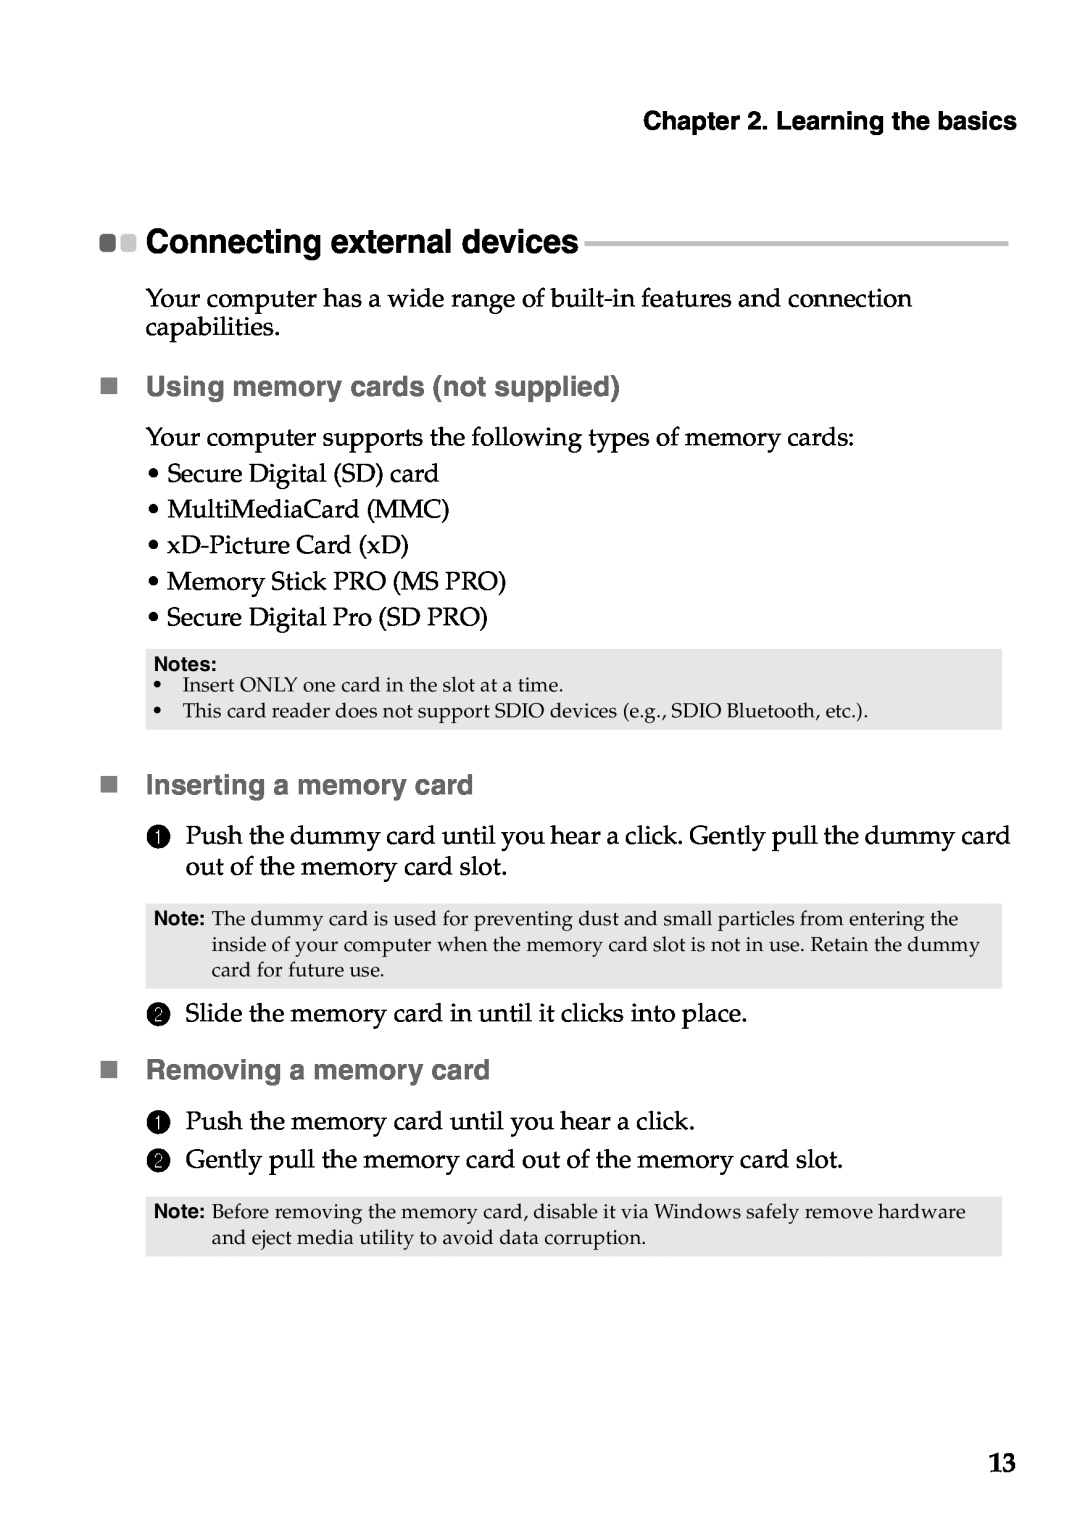 Lenovo V360 „ Using memory cards not supplied, „ Inserting a memory card, „ Removing a memory card, Learning the basics 